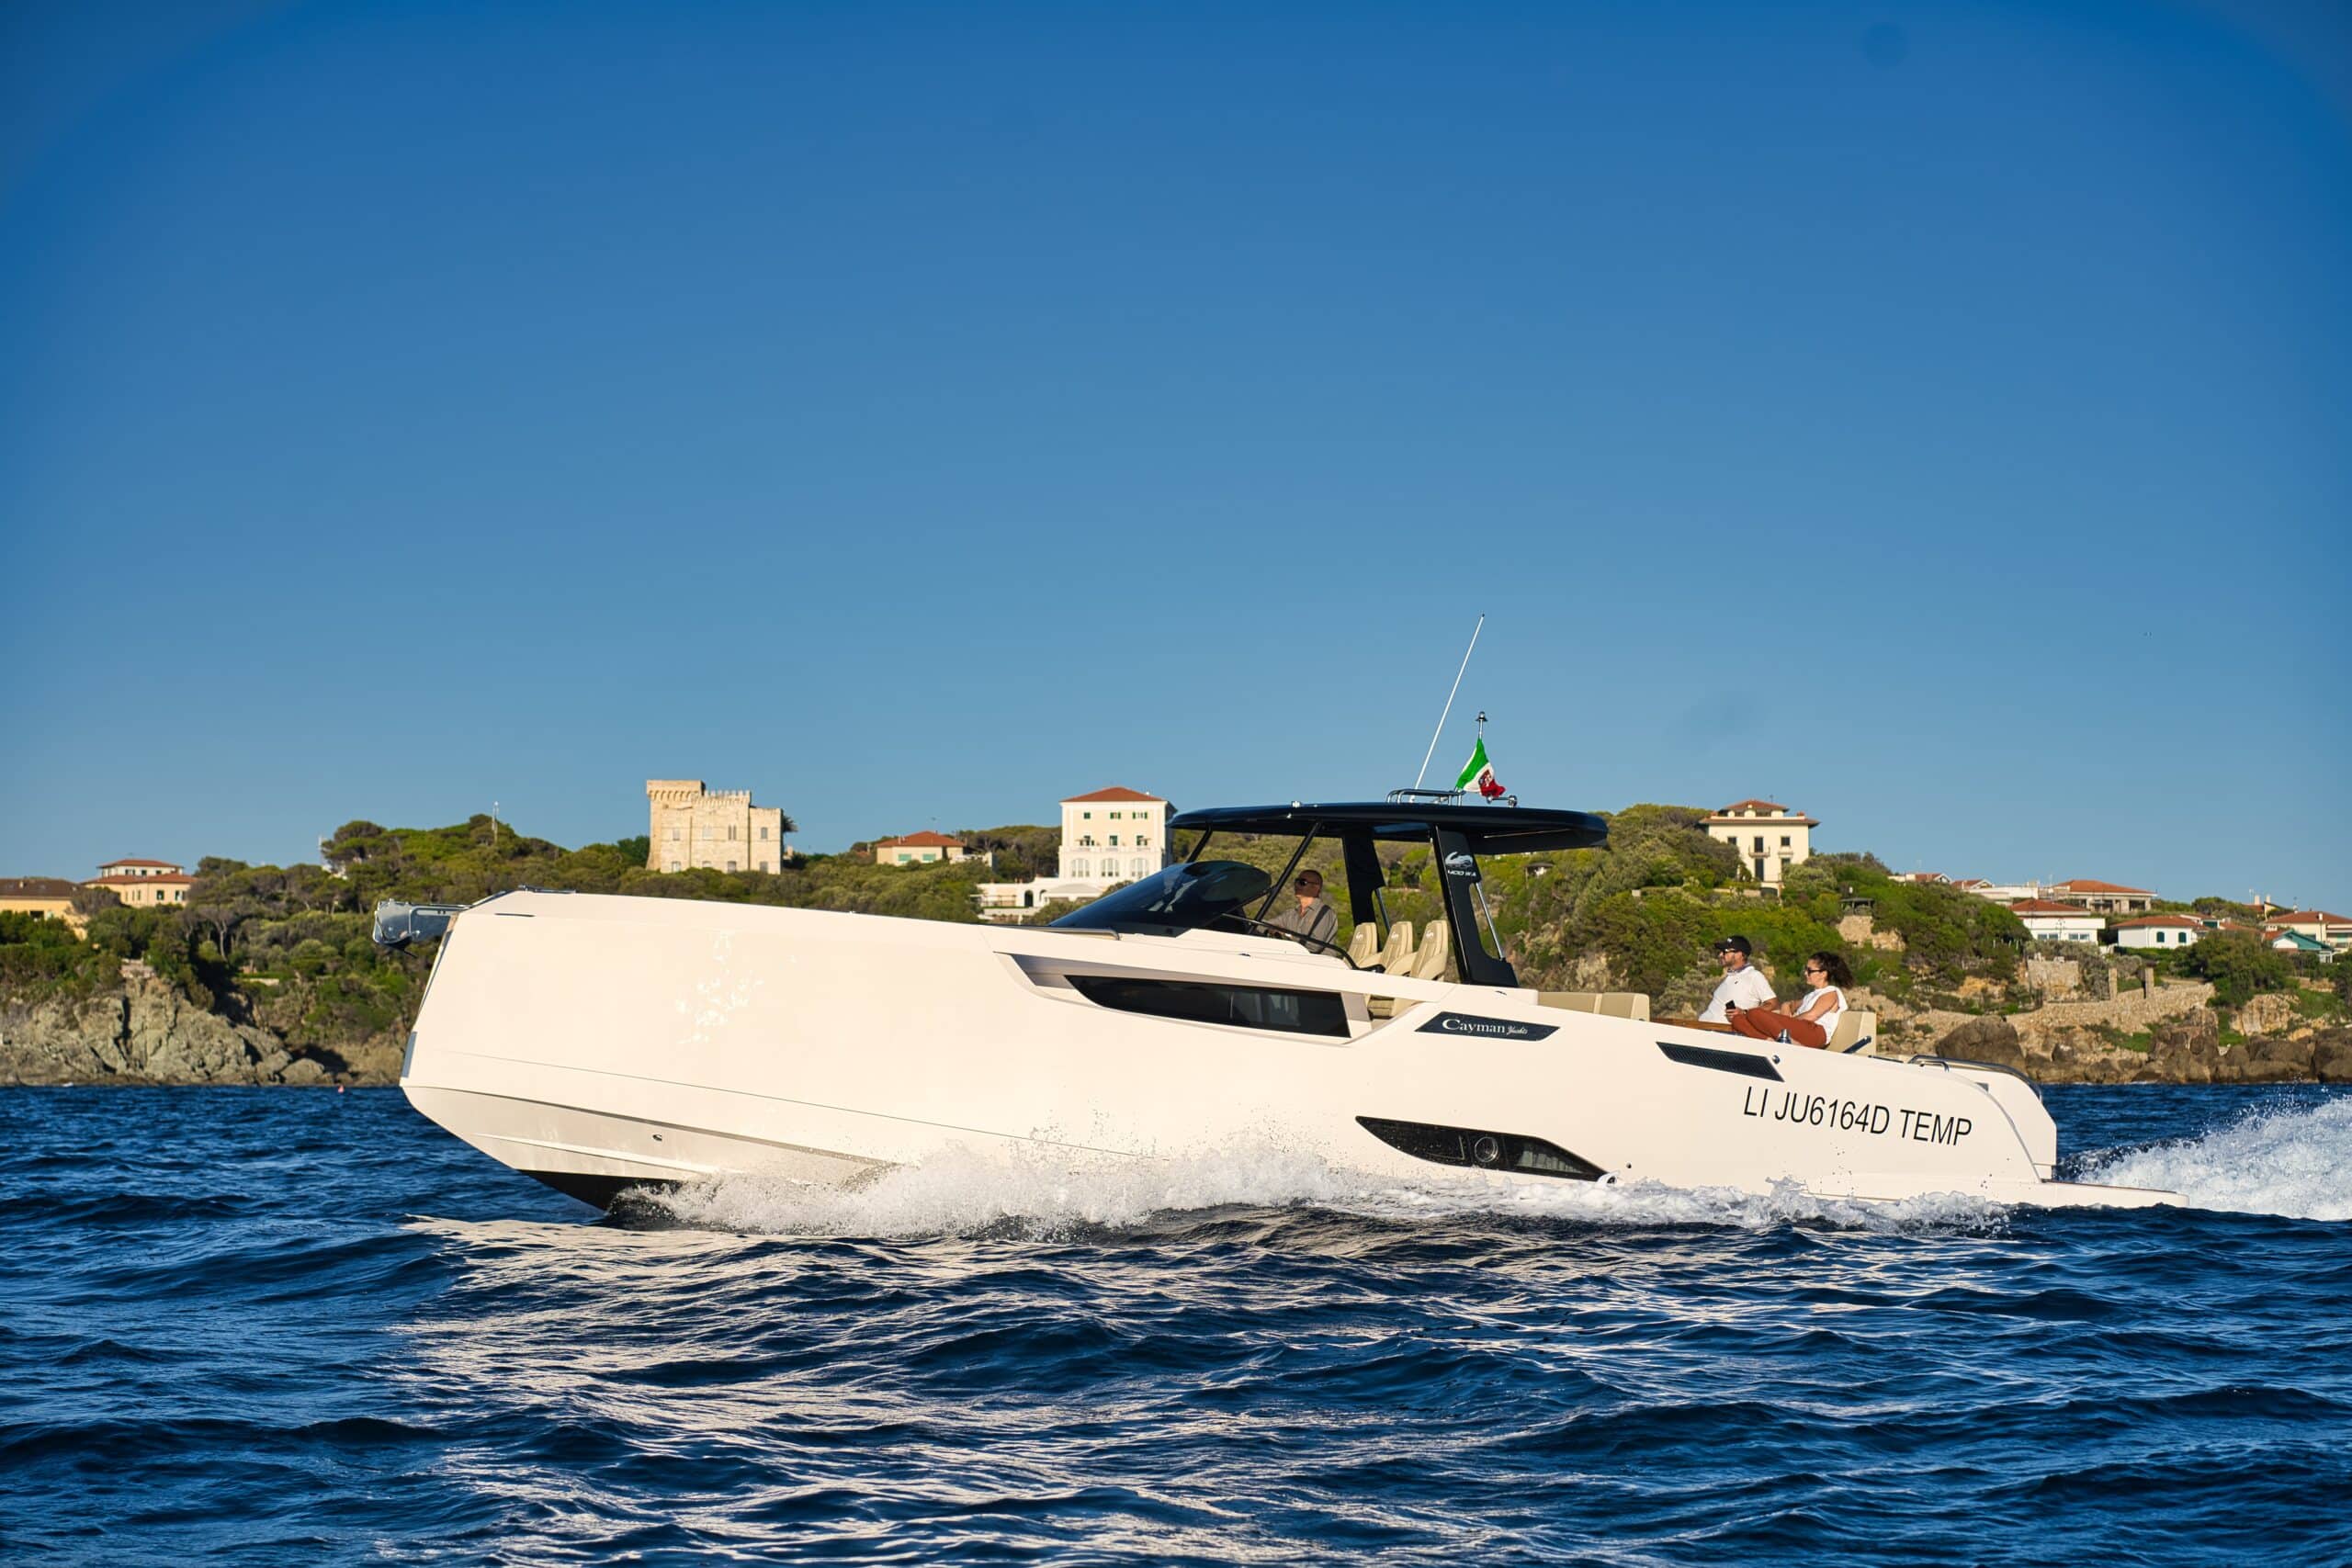 Cayman Yachts